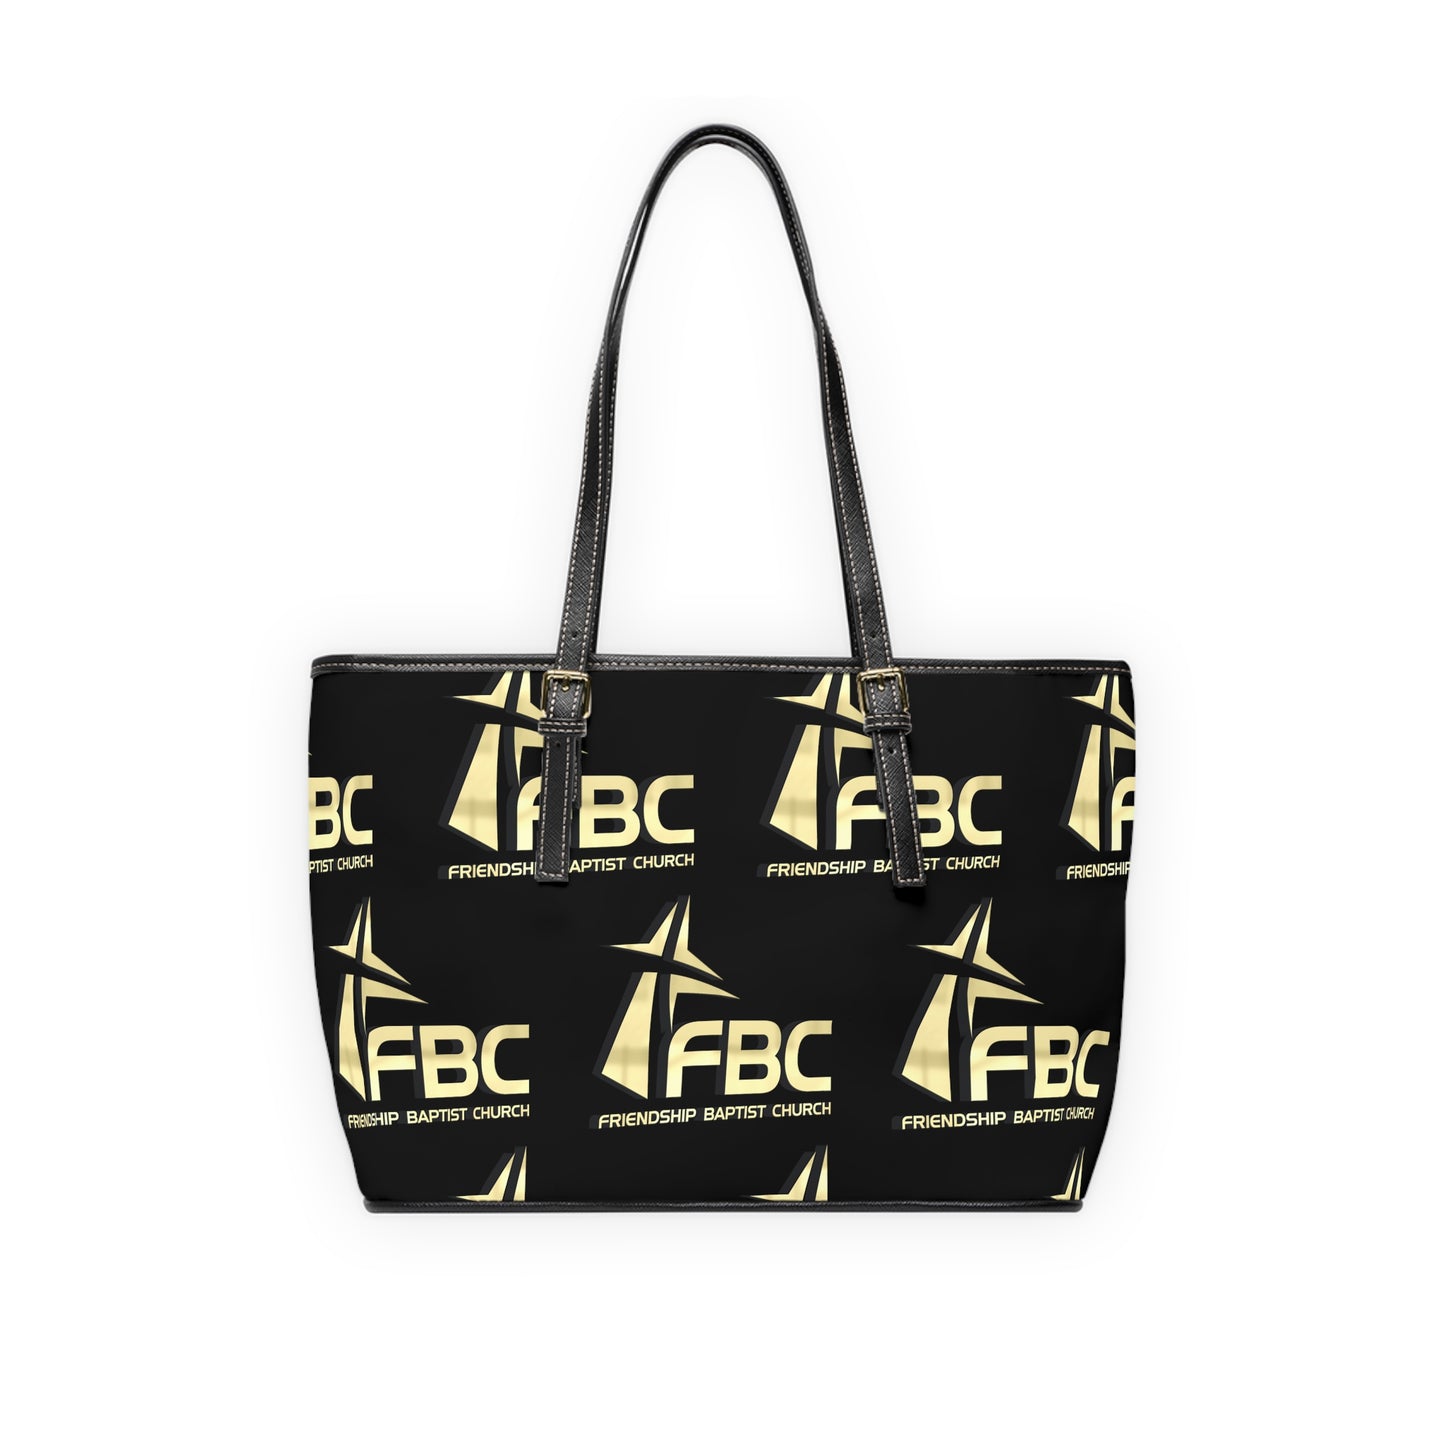 FBC NEW LOGO Black PU Leather Shoulder Bag